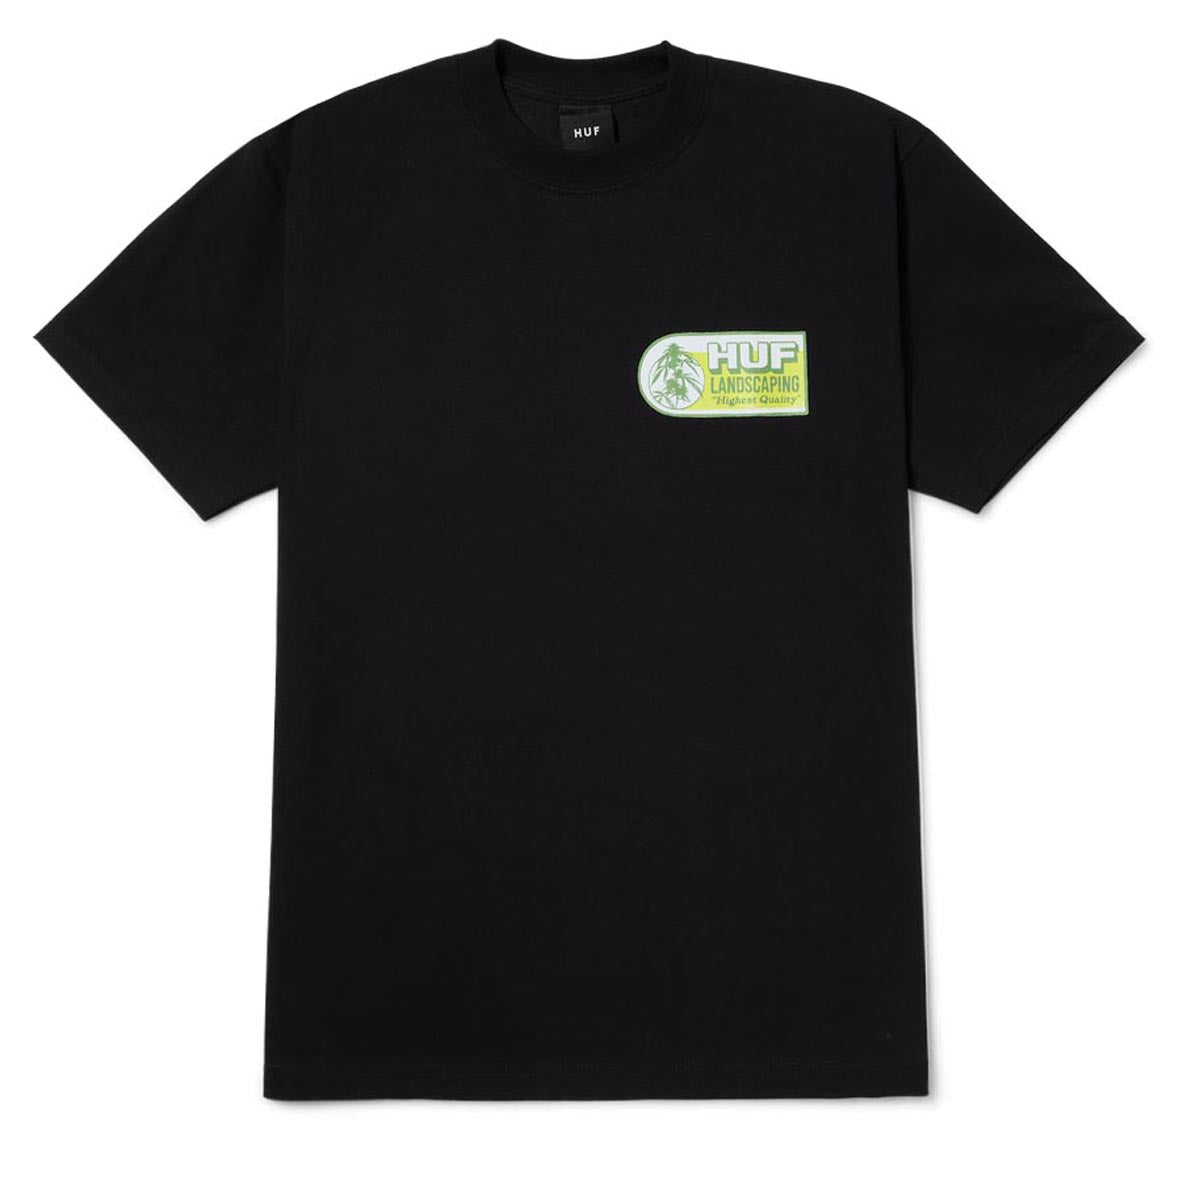 HUF Landscaping T-Shirt - Black image 2